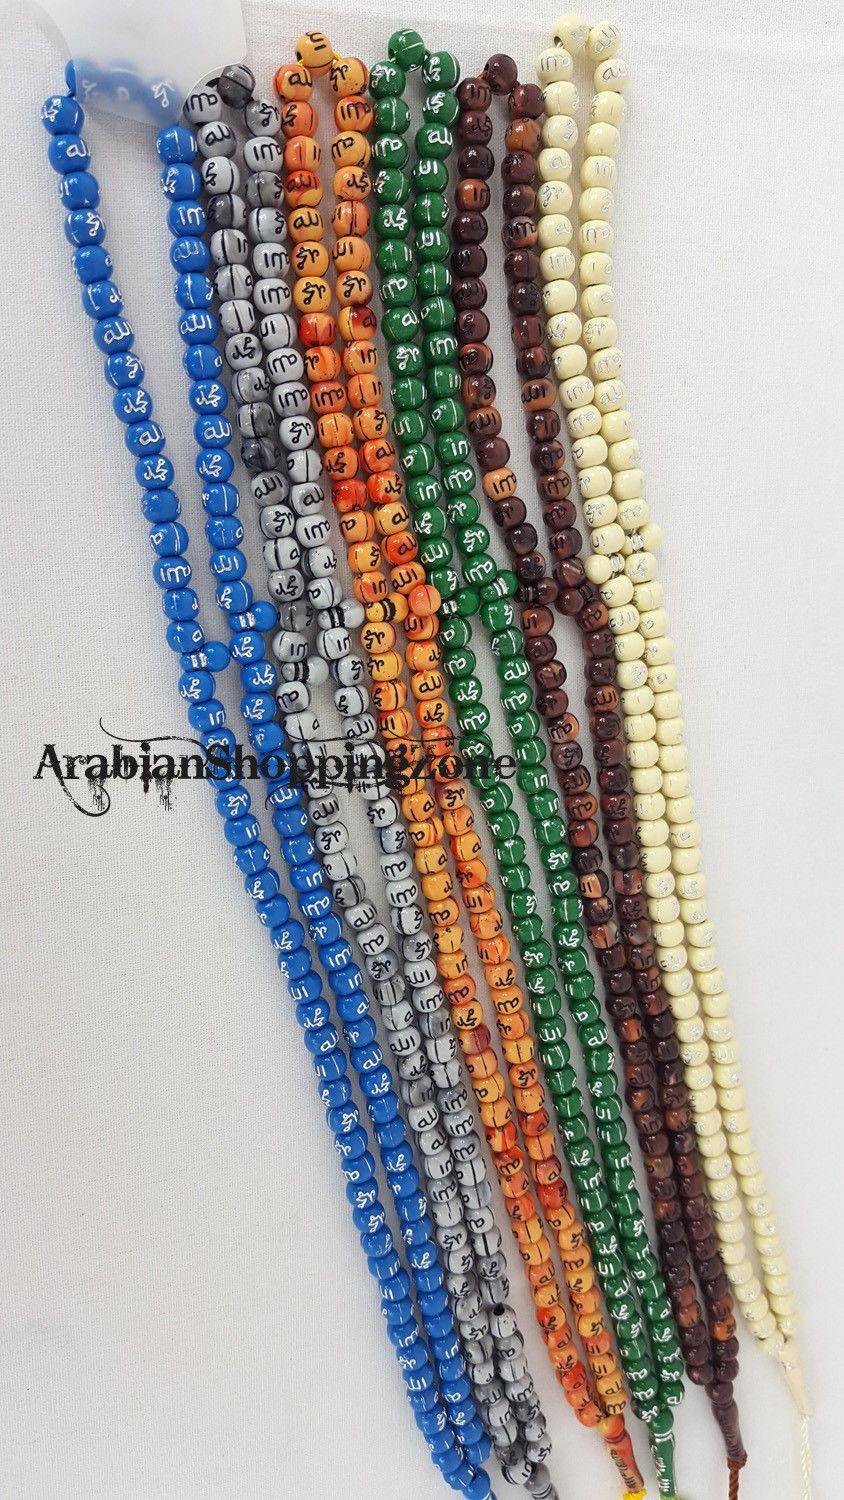 Islamic Salah 6mm Small Prayer Beads 99 Misbaha - Arabian Shopping Zone